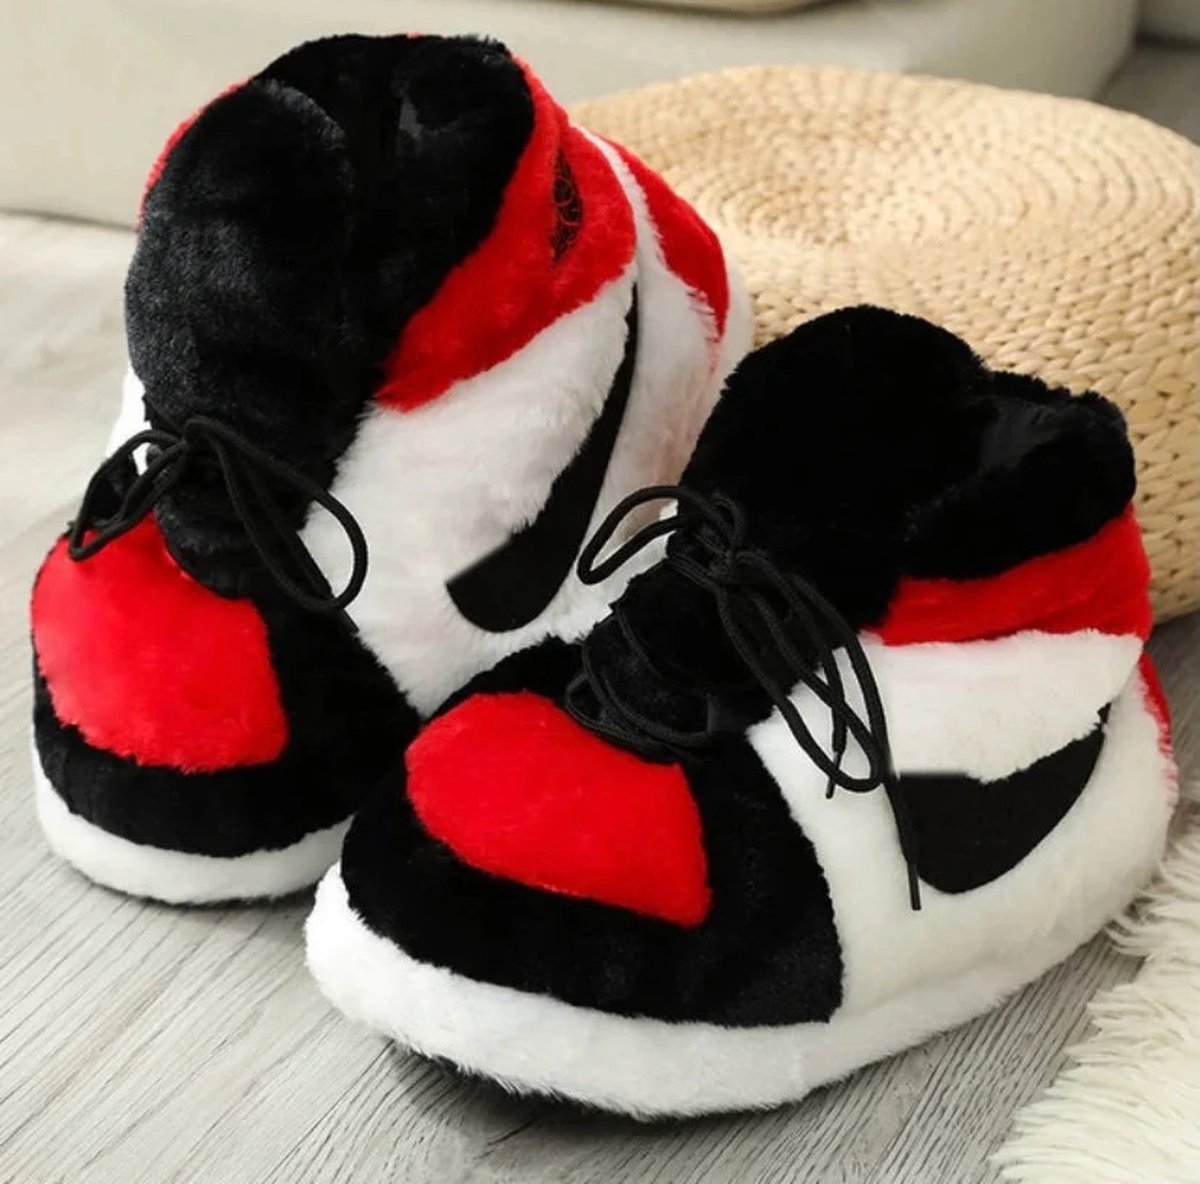 Sneaker Sloffen Rood met Zwarte details - Sloffen - Pantoffels - Nike sloffen - Comfortabel - Maat 36-44 One Size - Unisex - Winter - Cadeautip